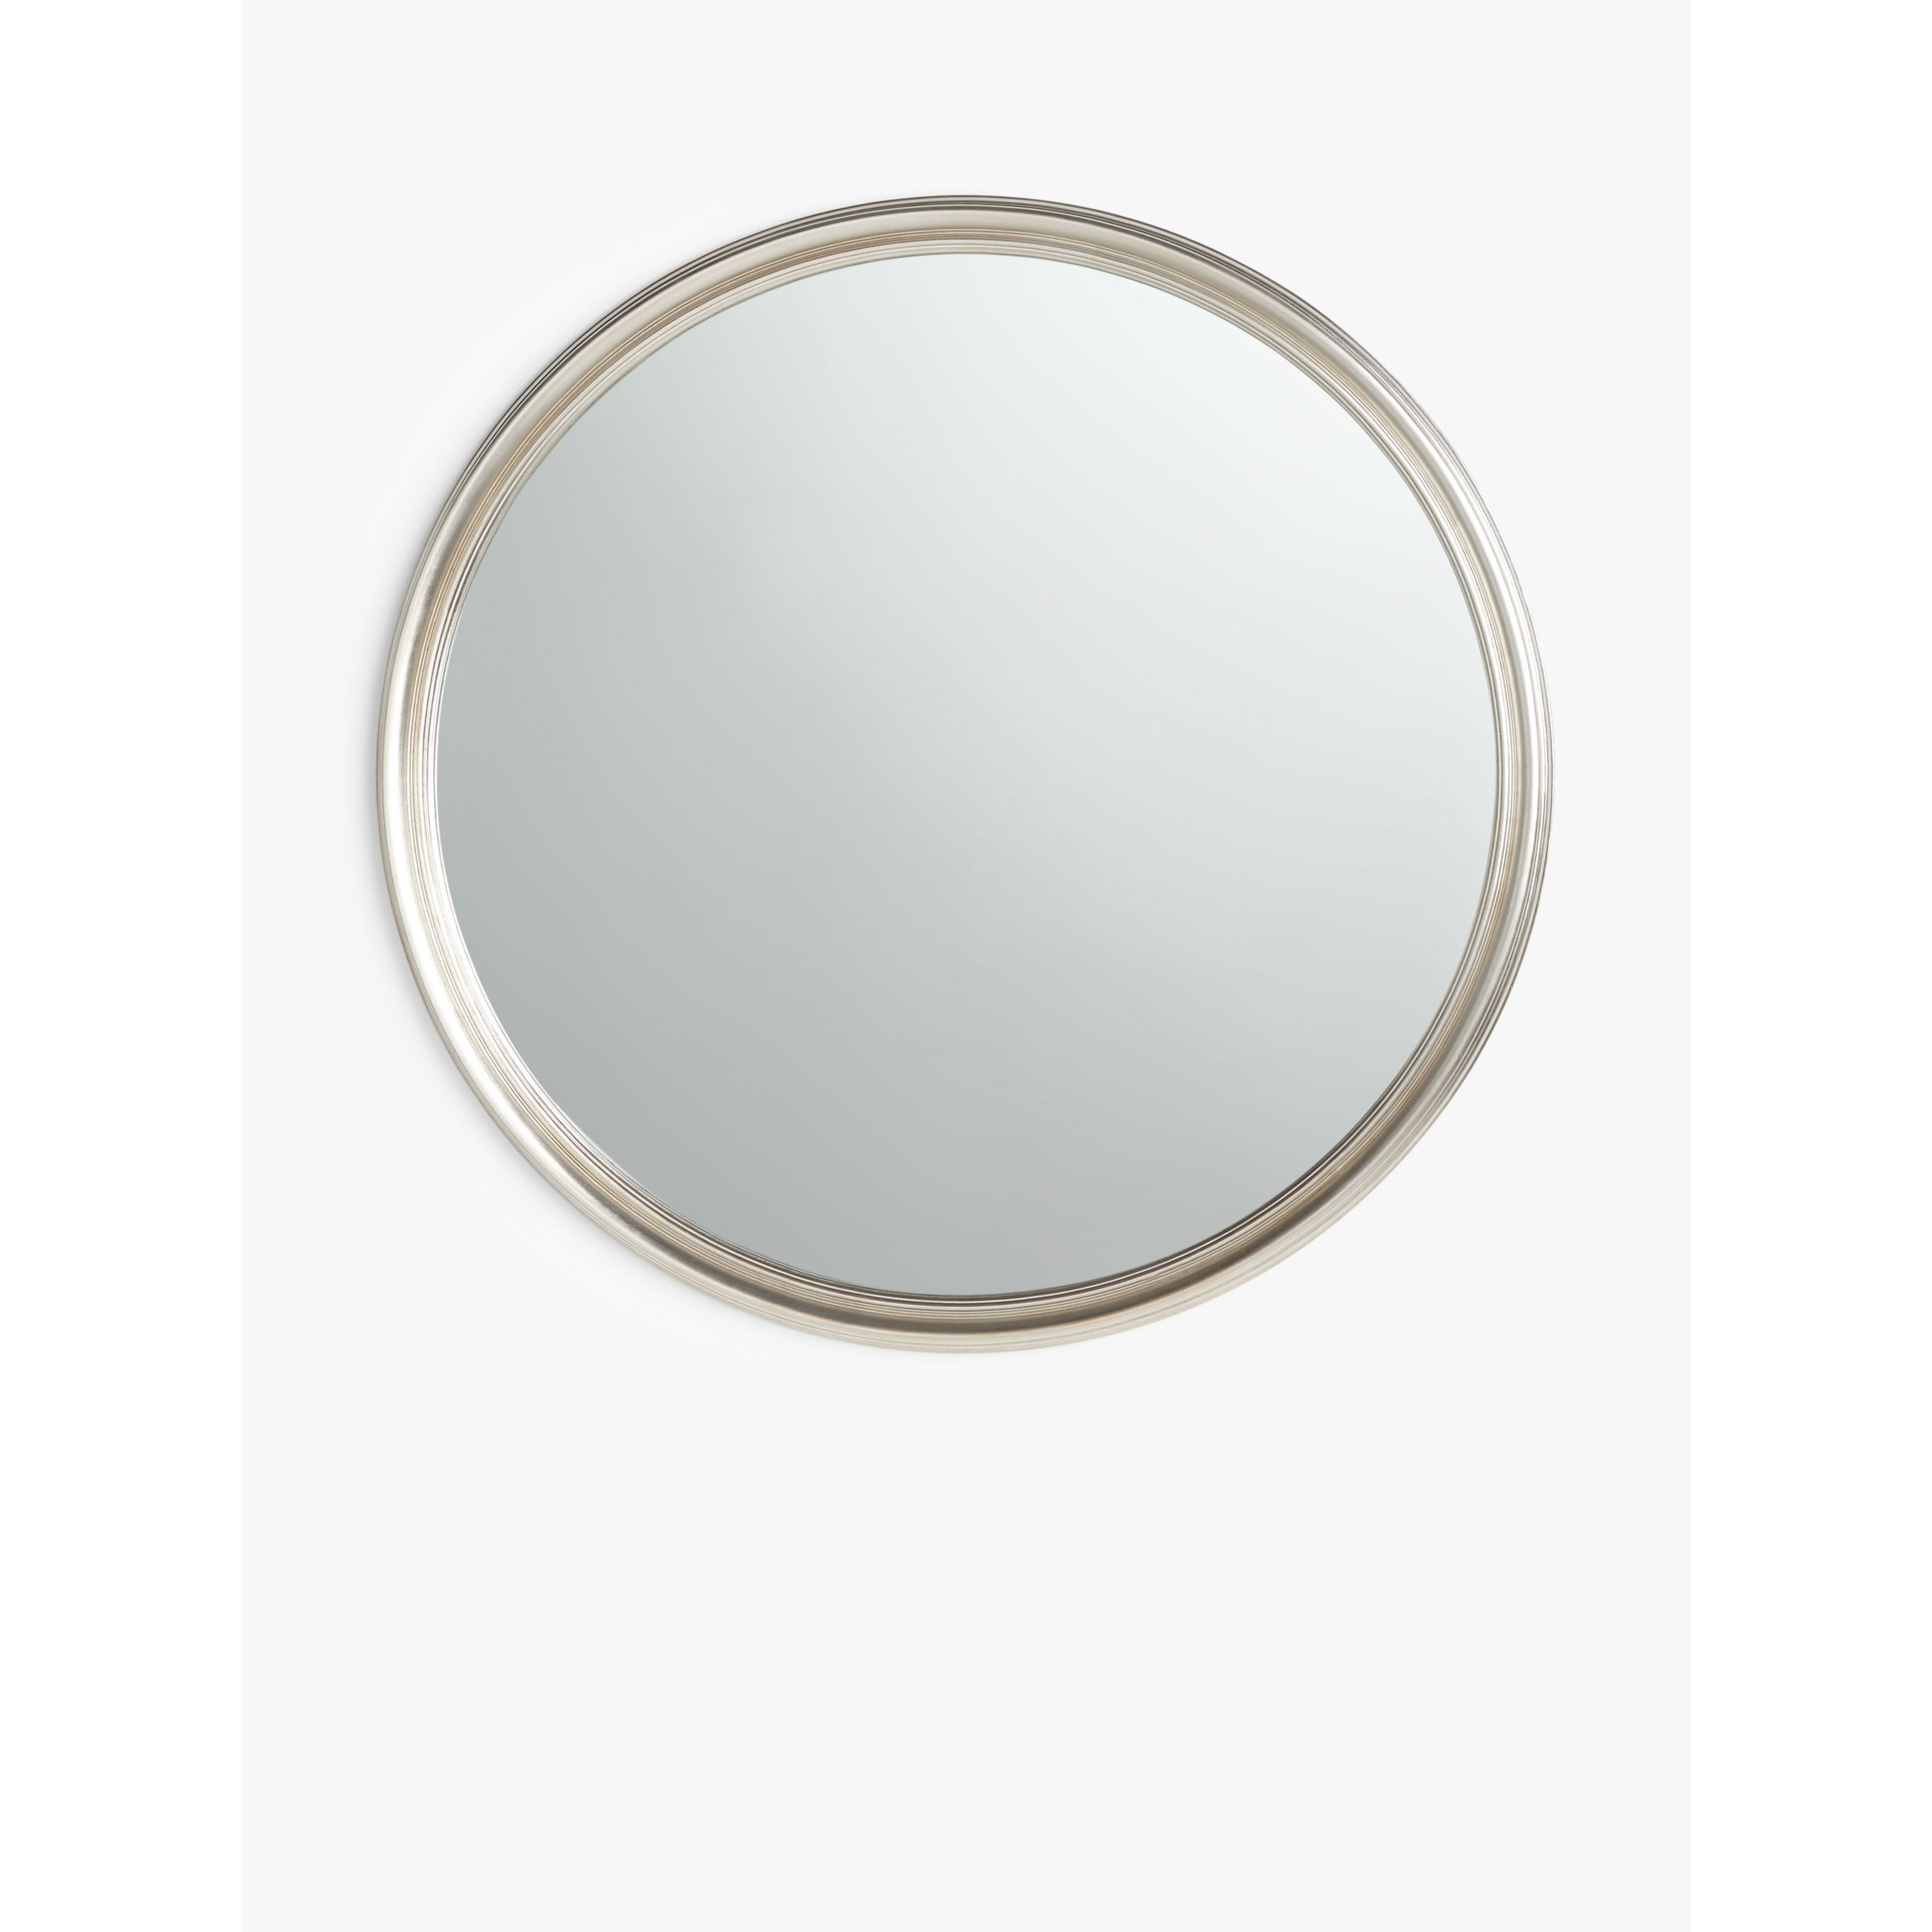 John Lewis Ribbed Round Wall Mirror, Silver - image 1